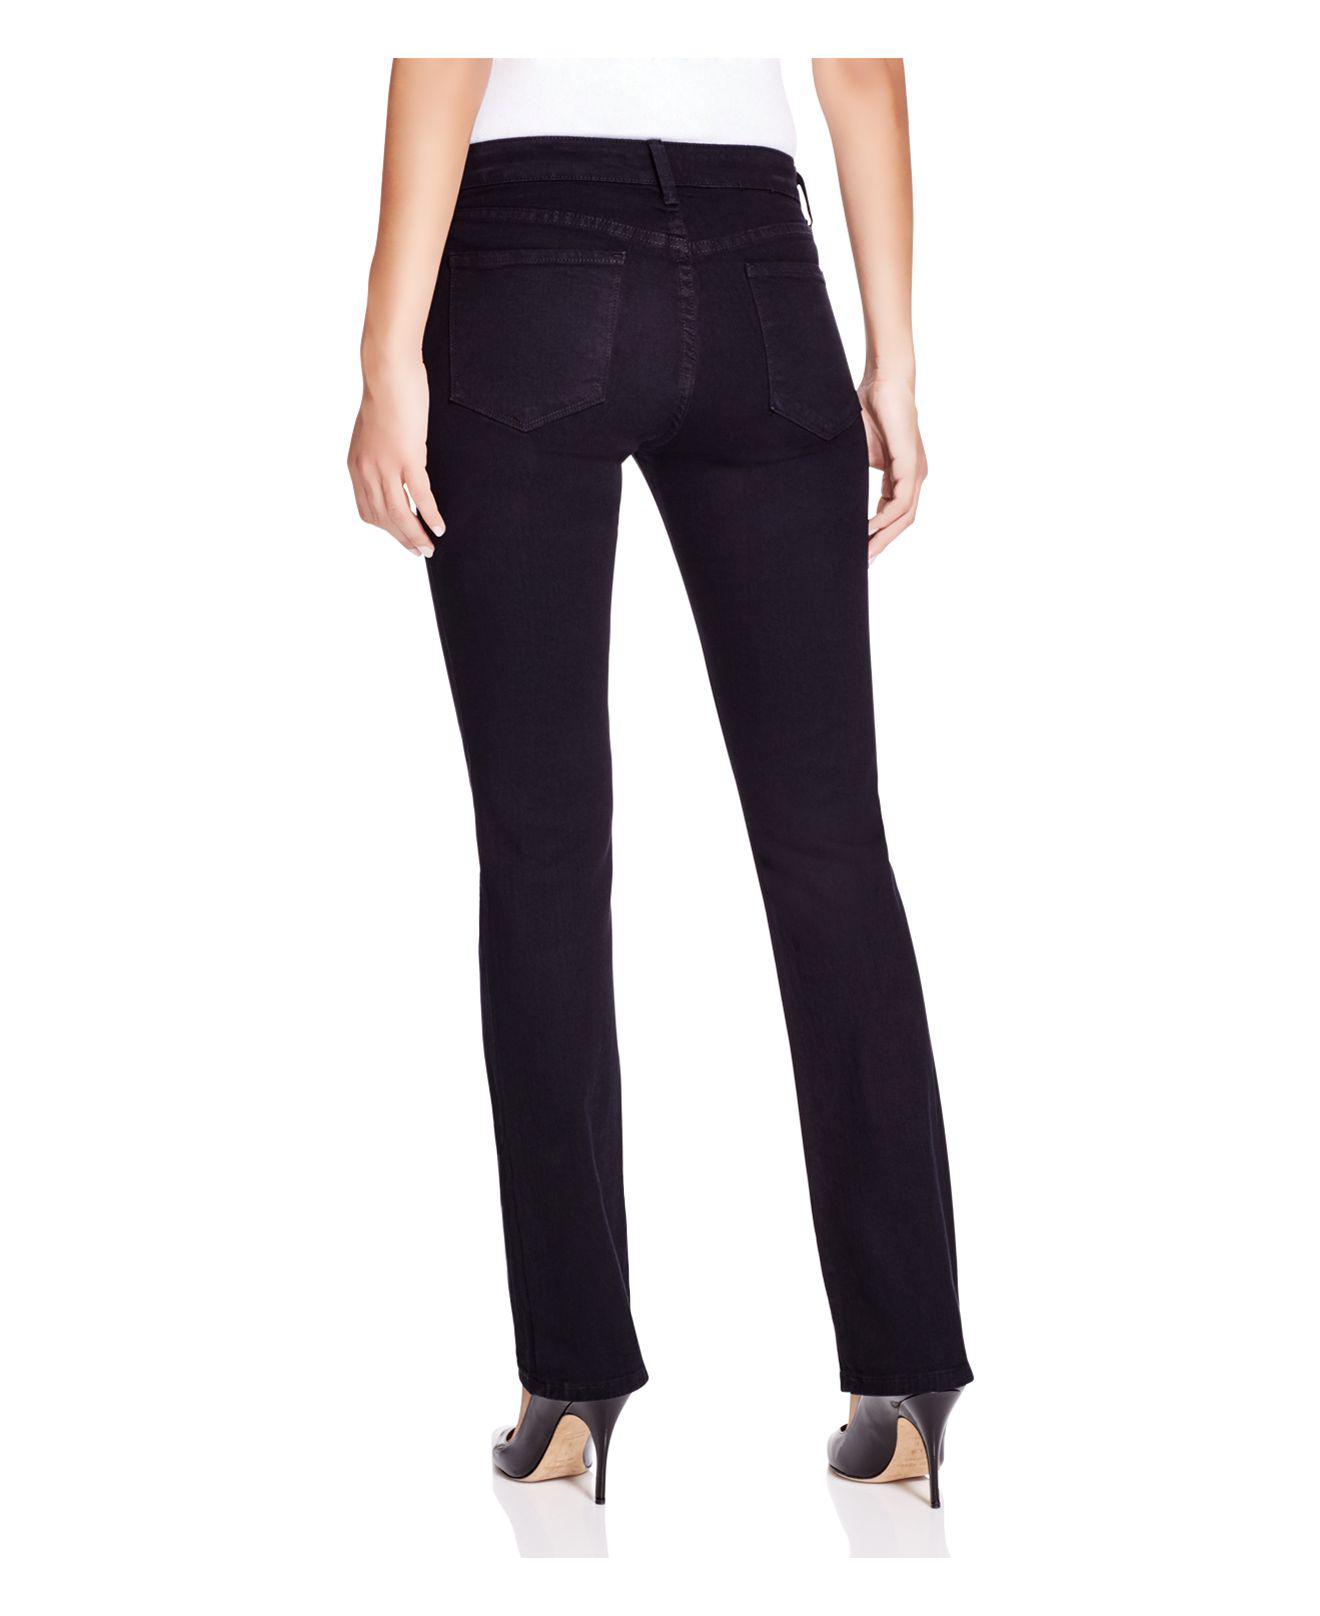 Lyst - Nydj Billie Mini Bootcut Jeans In Black in Black